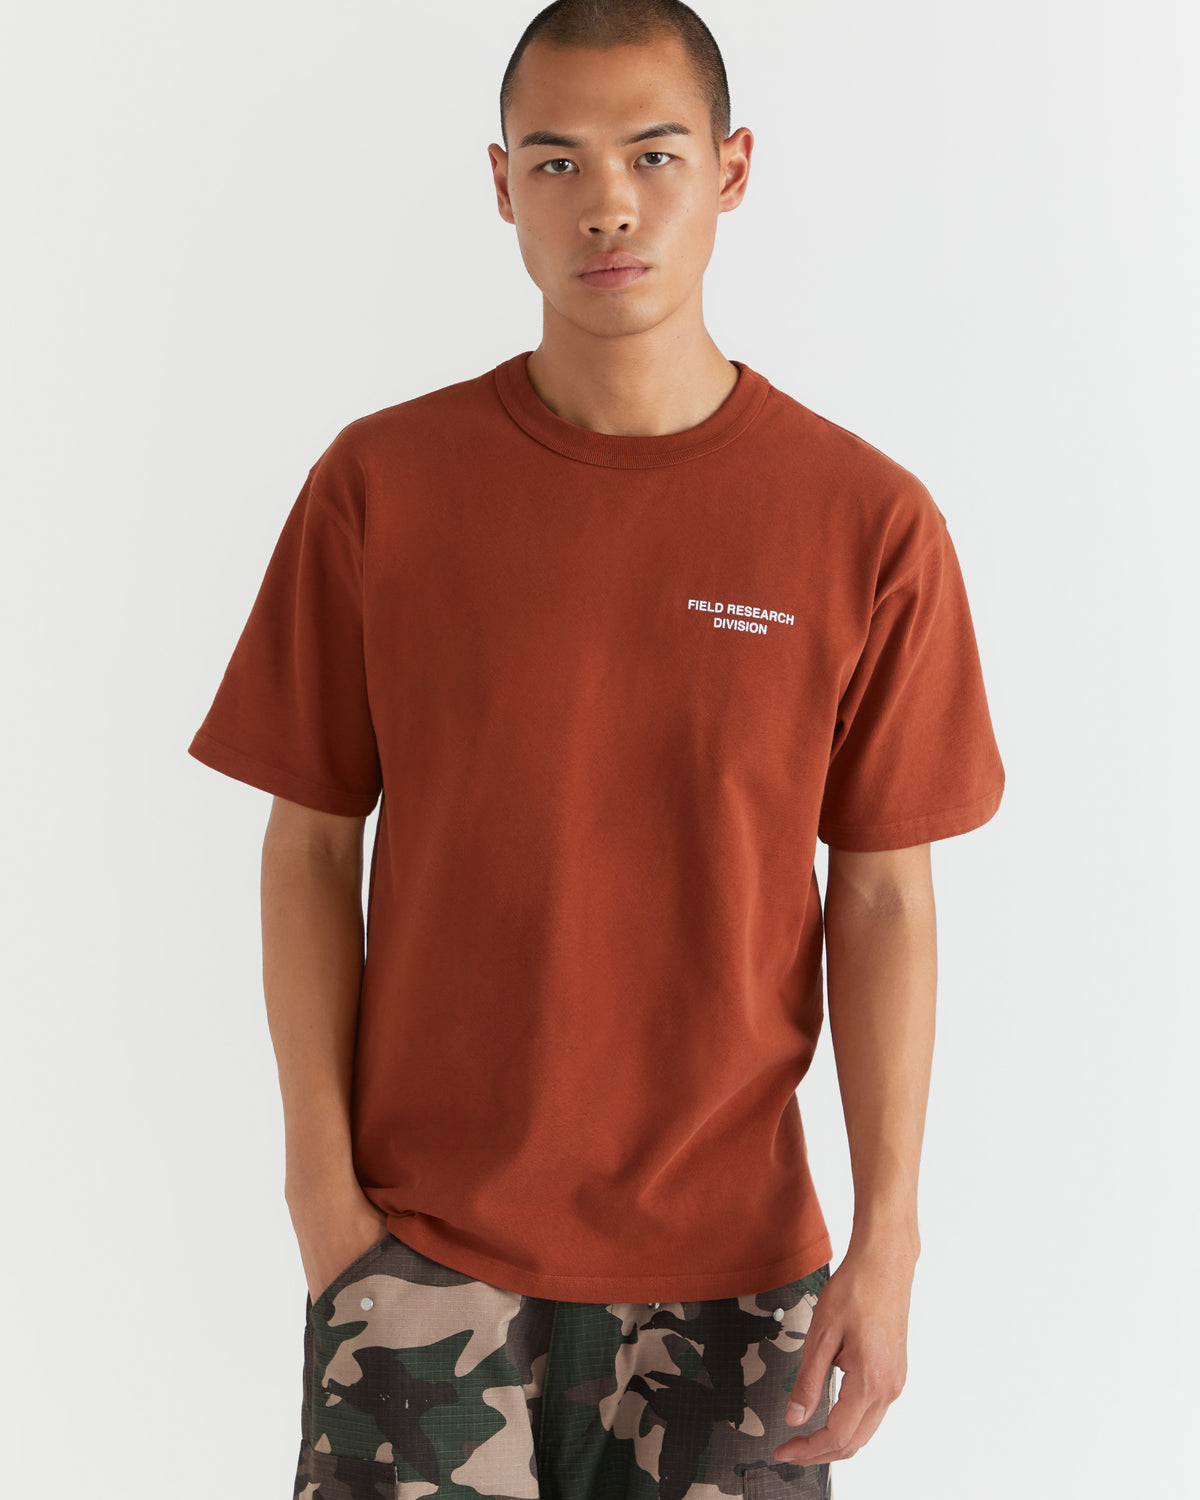 Men - Field Research Division T-Shirt - Burnt Orange - 2